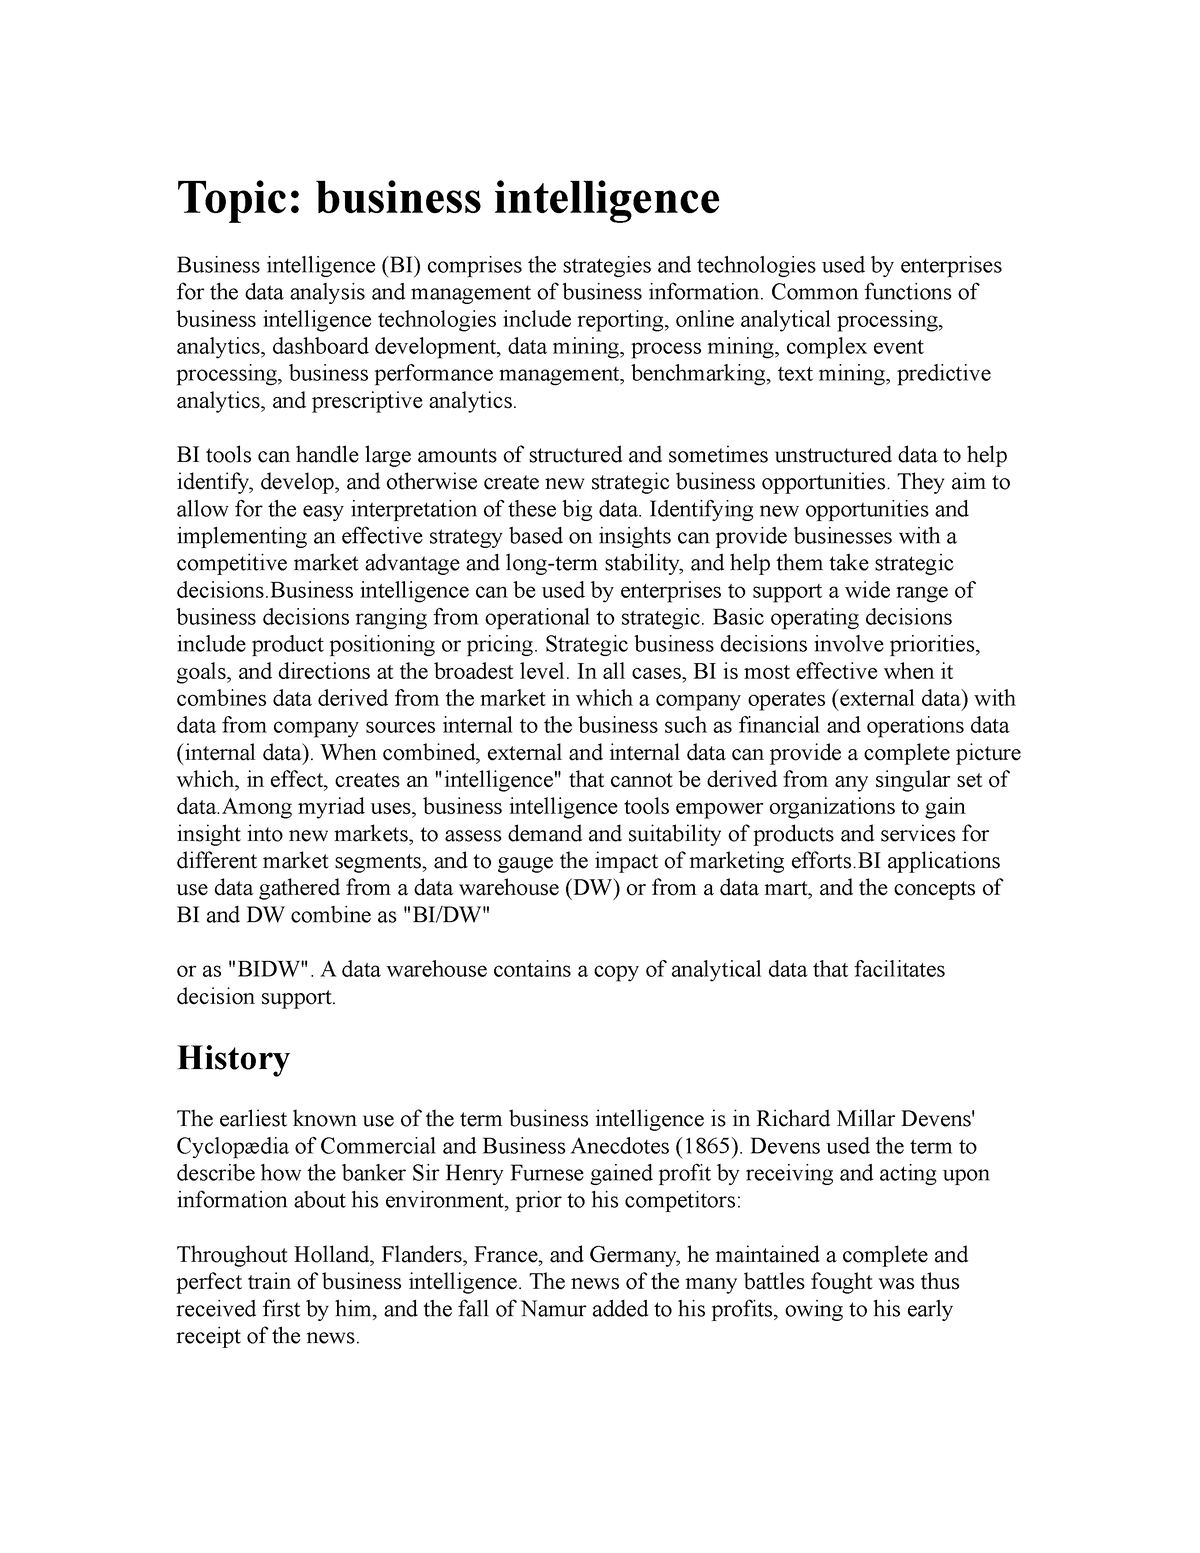 dissertation topics on business intelligence